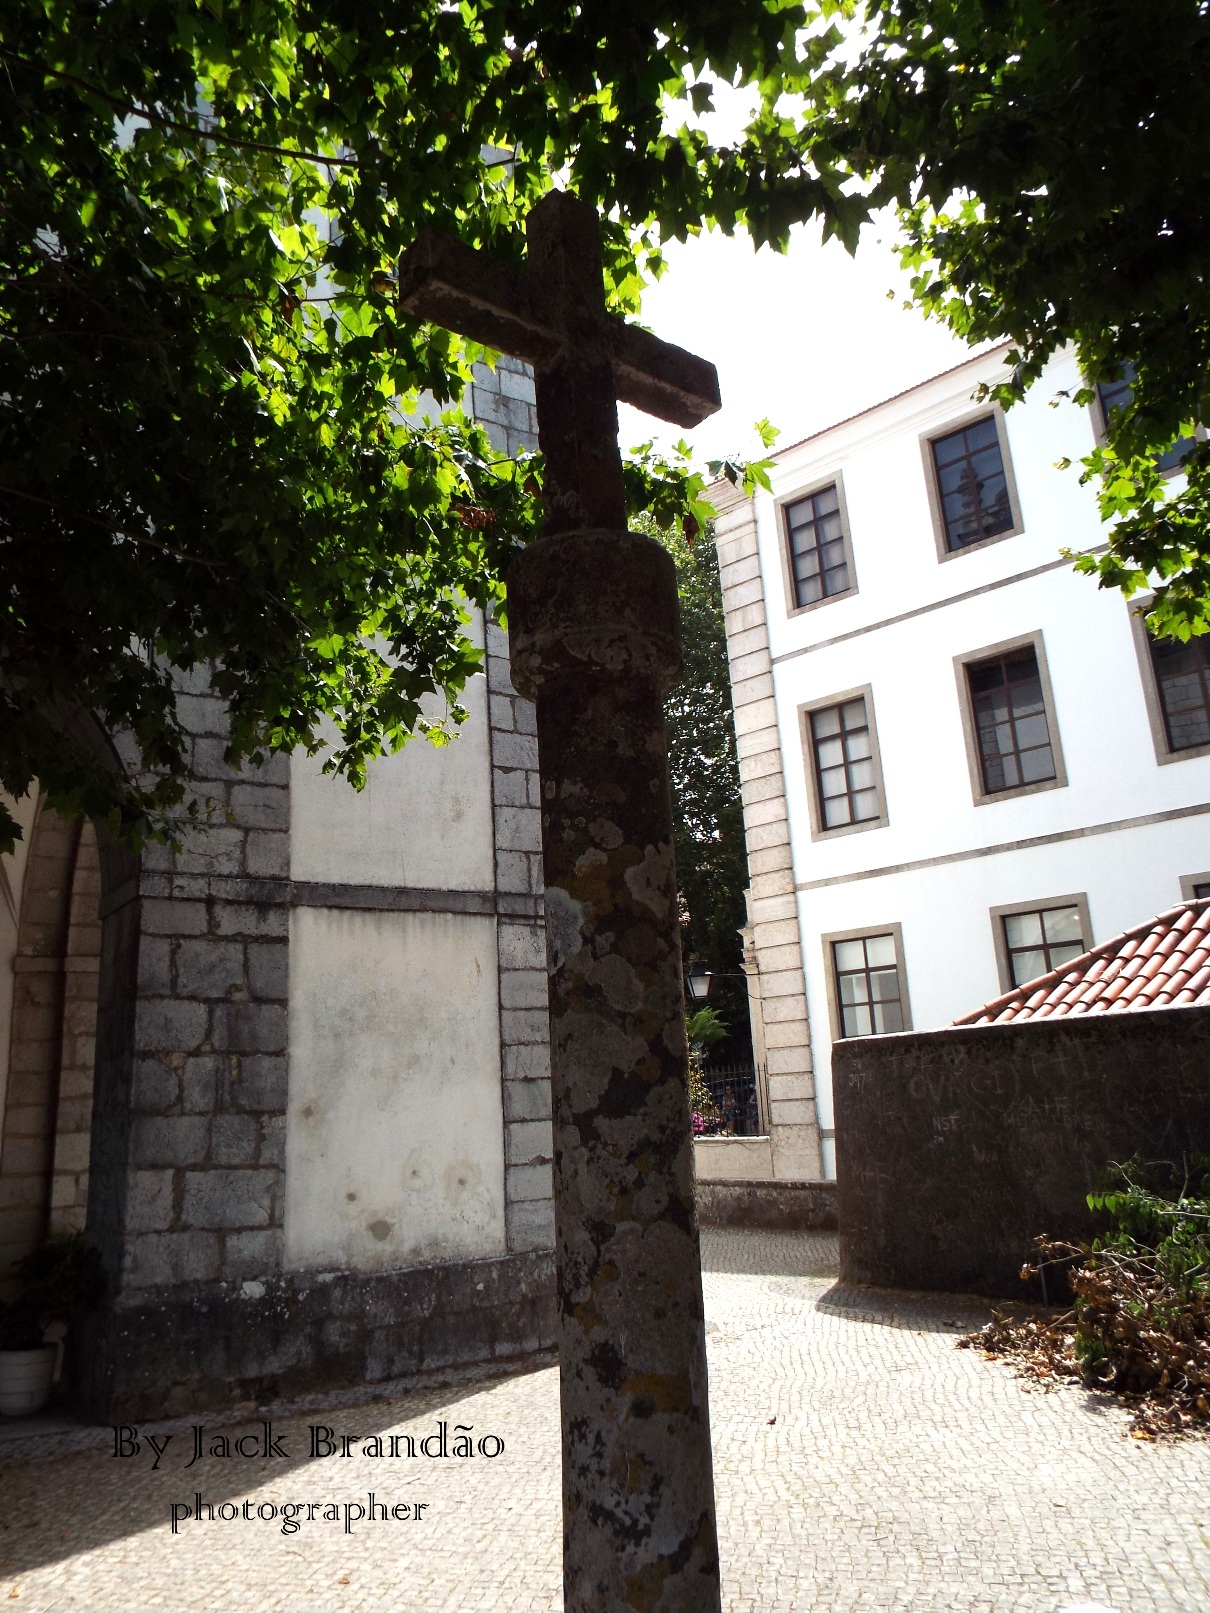 Sintra; Portugal; Castle; History; Jack Brandão; photographer, writer, photos for sale, jackbran